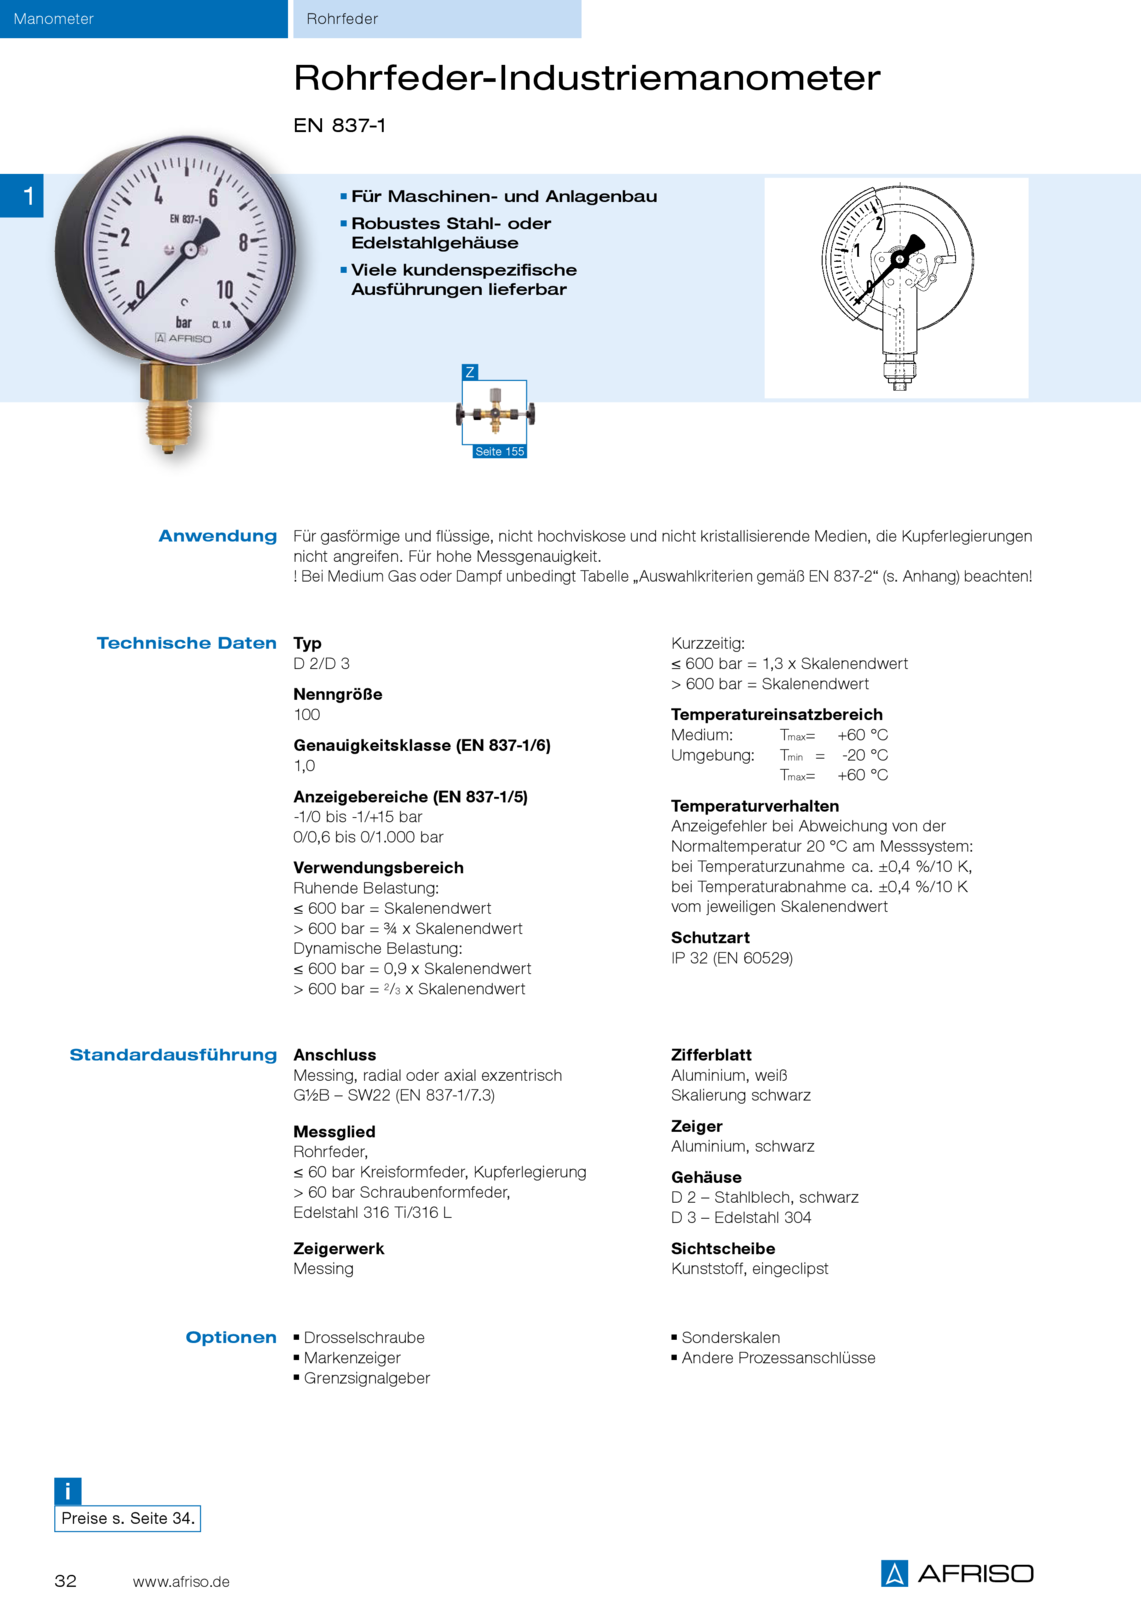 Afriso rohrfedere - industriemanometer类型D3